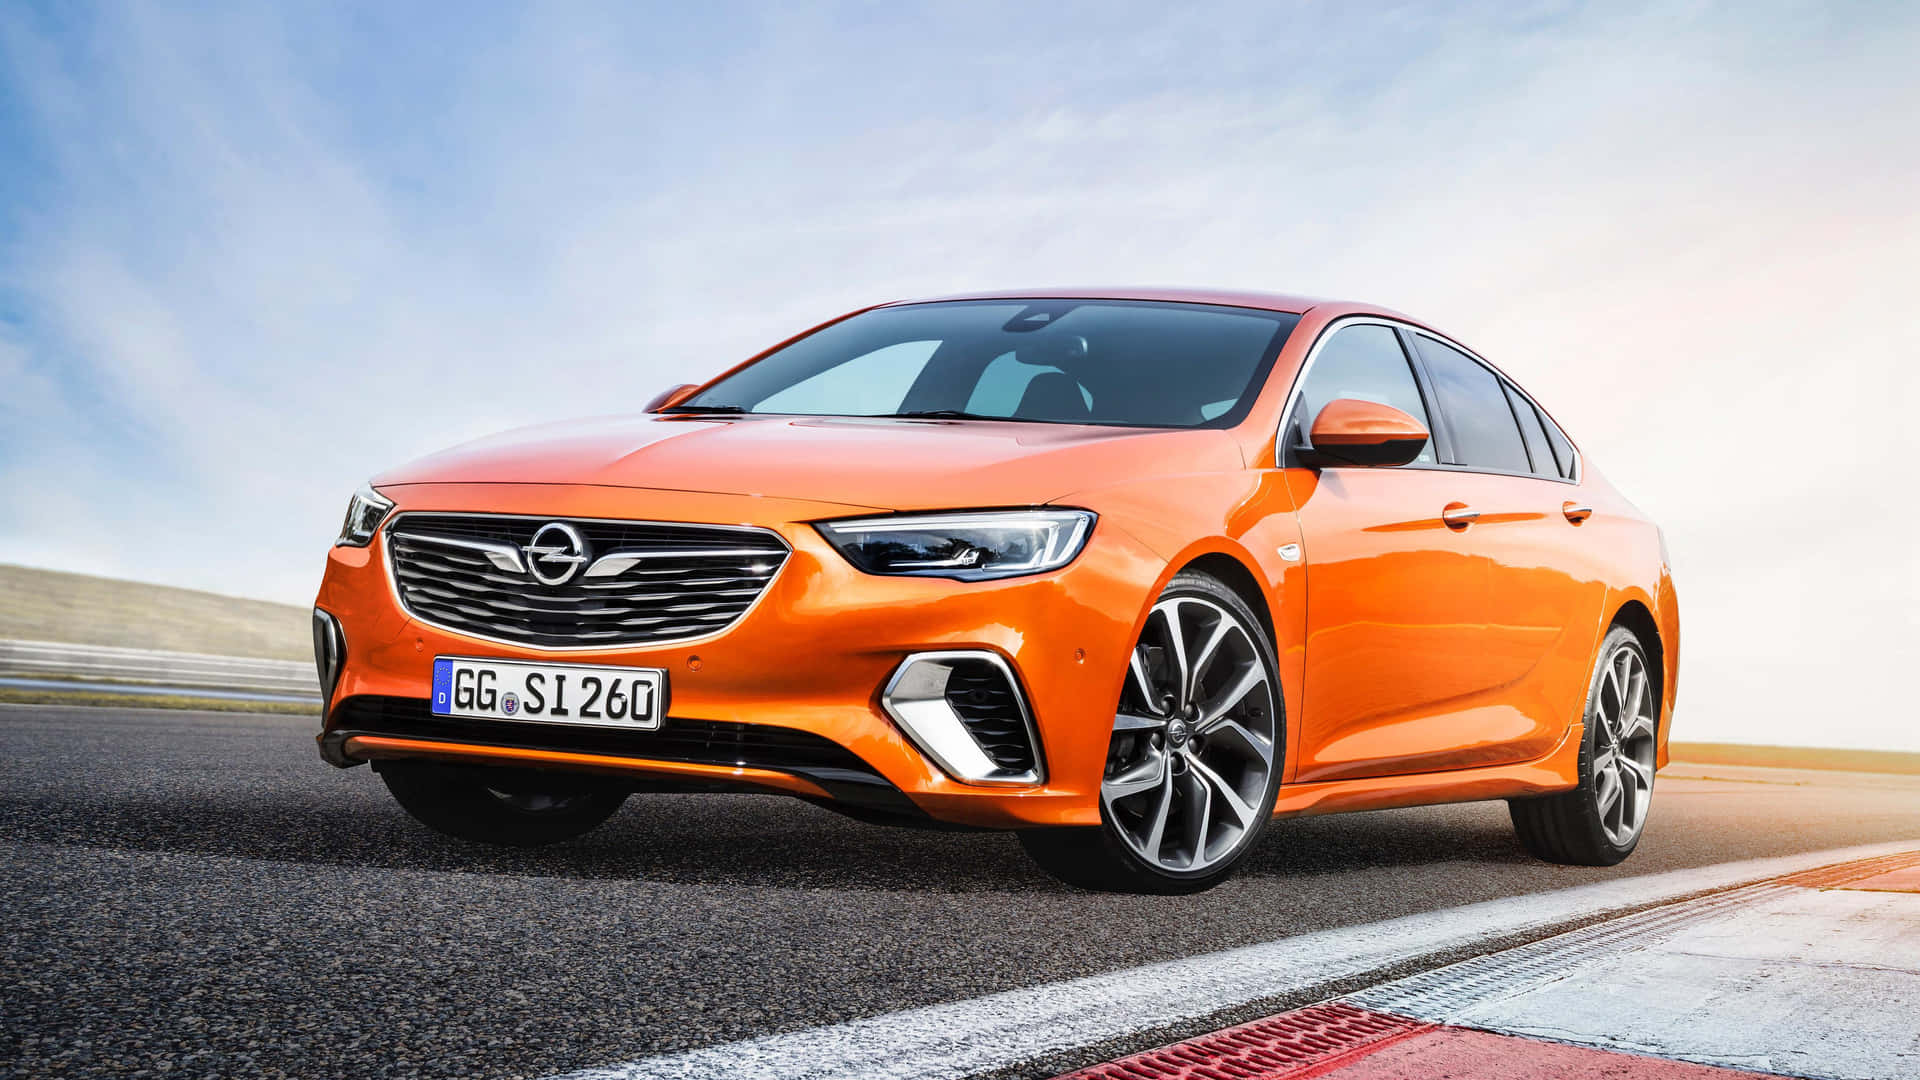 Stylish Opel Insignia in motion Wallpaper